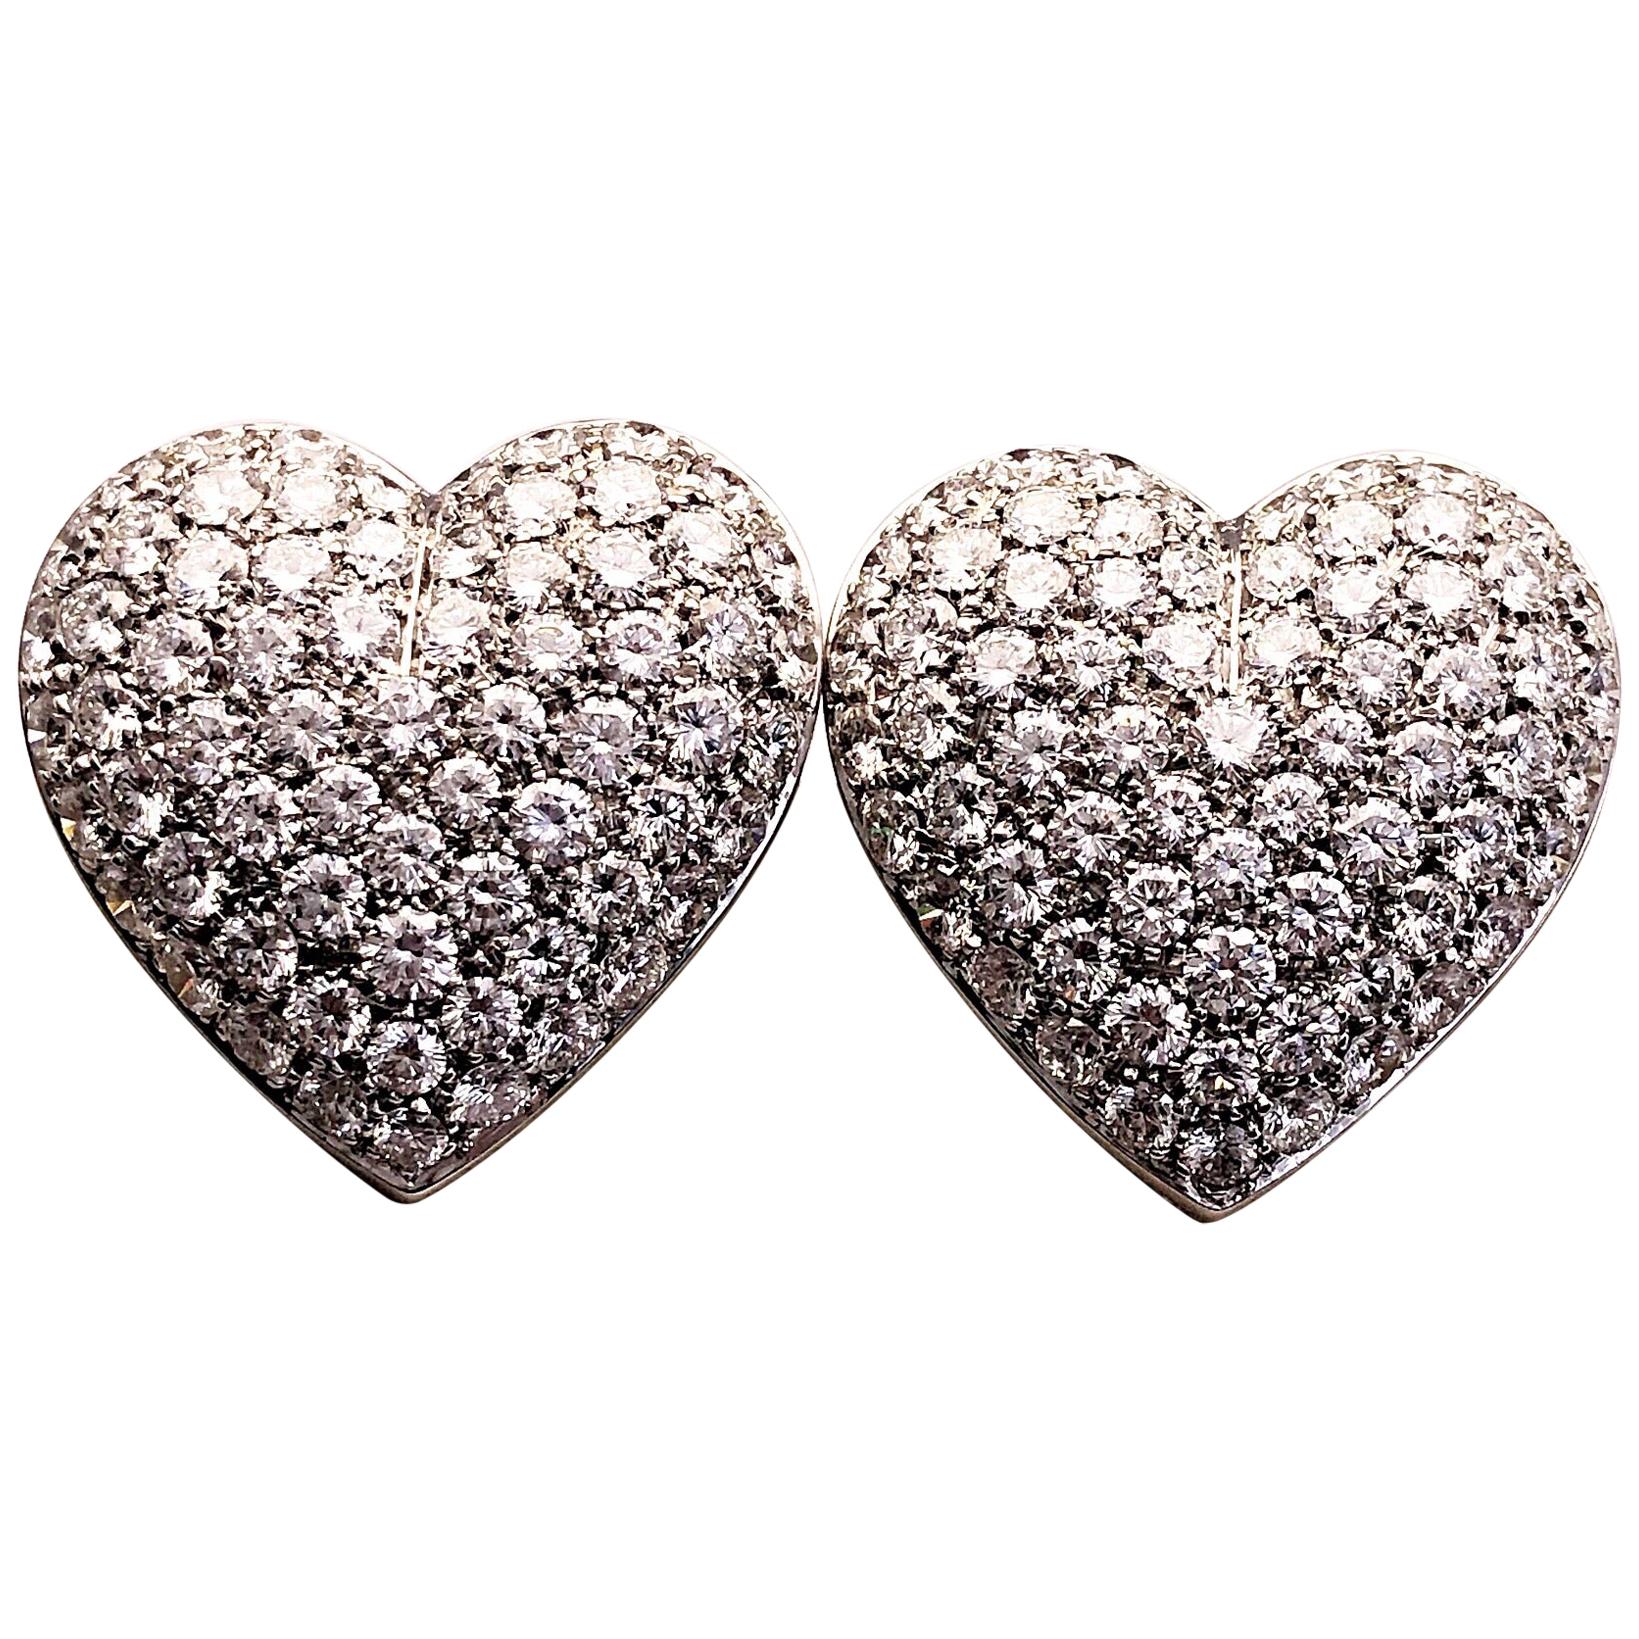 Picchiotti 18 Karat White Gold and 5.37 Carat, Diamond Heart Earrings